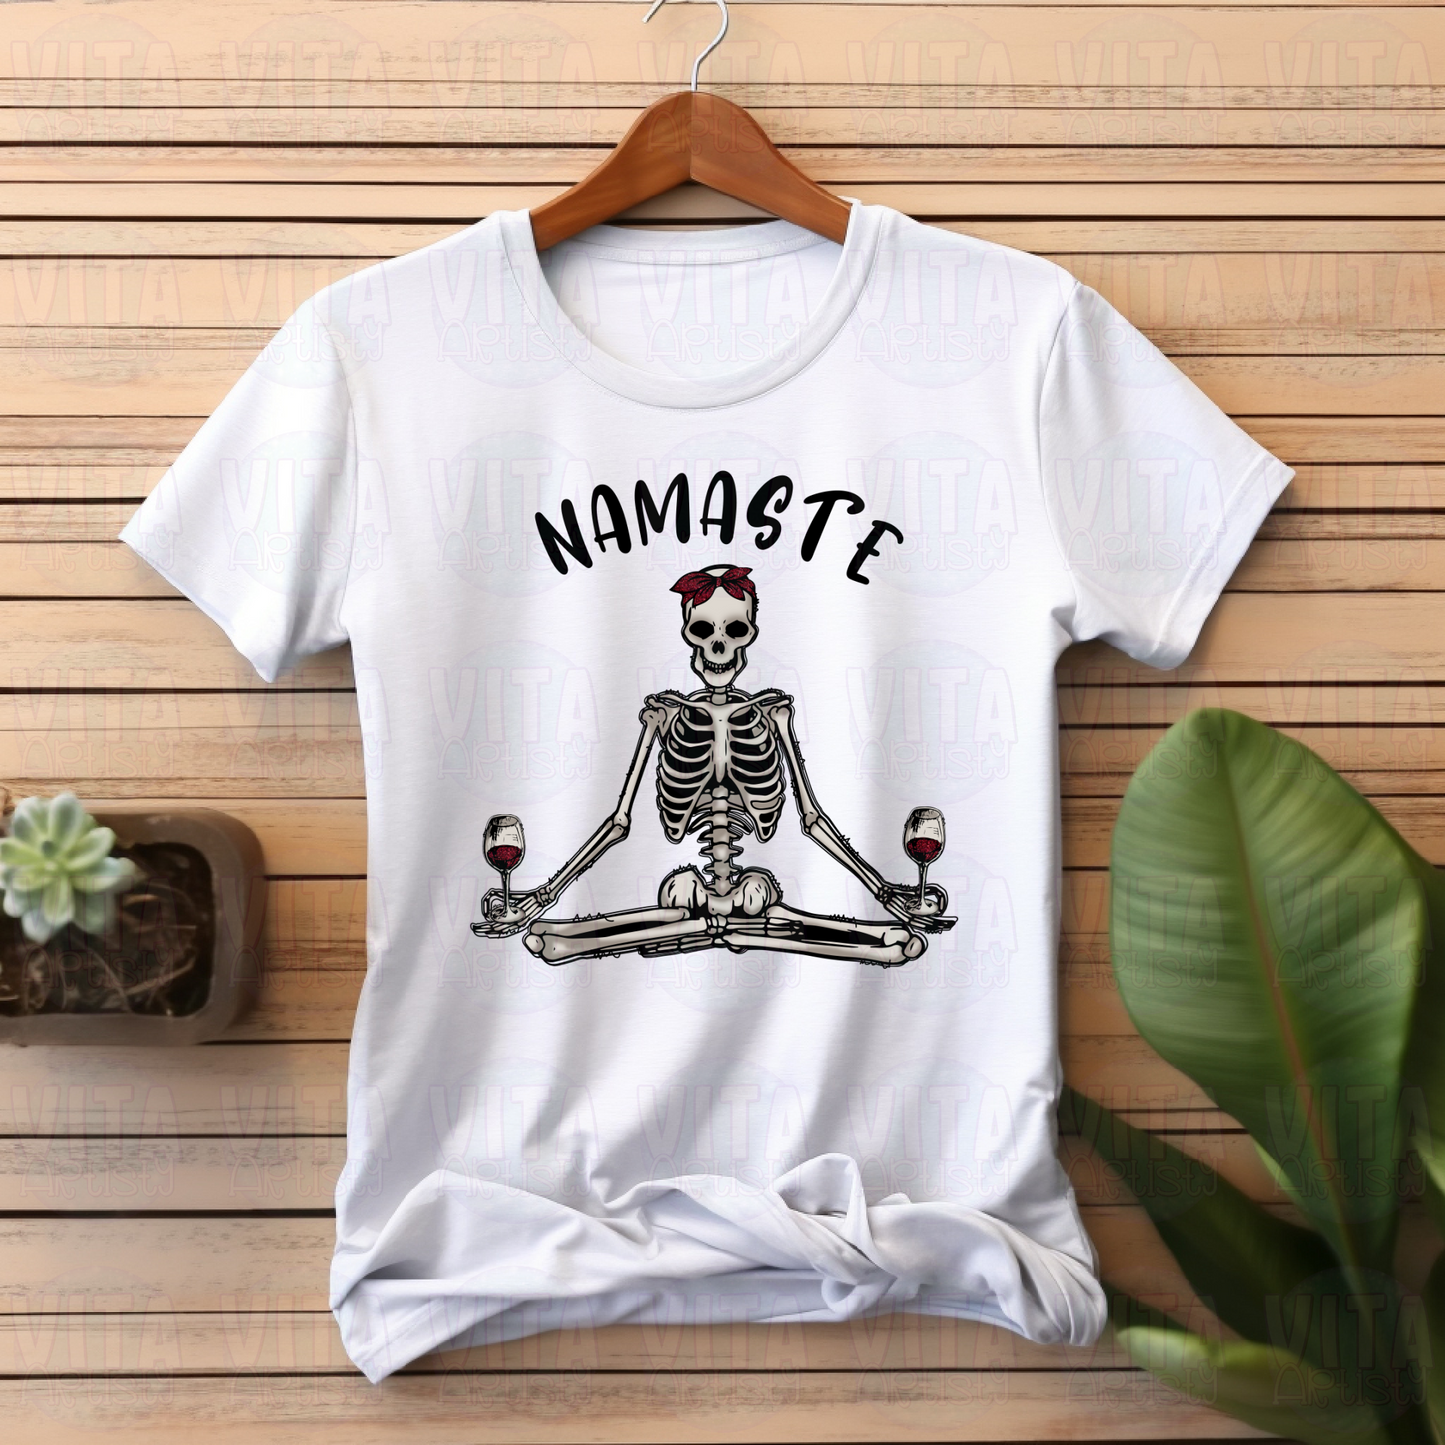 Namaste - T-shirt/Crewneck Sweatshirt/Hoodie